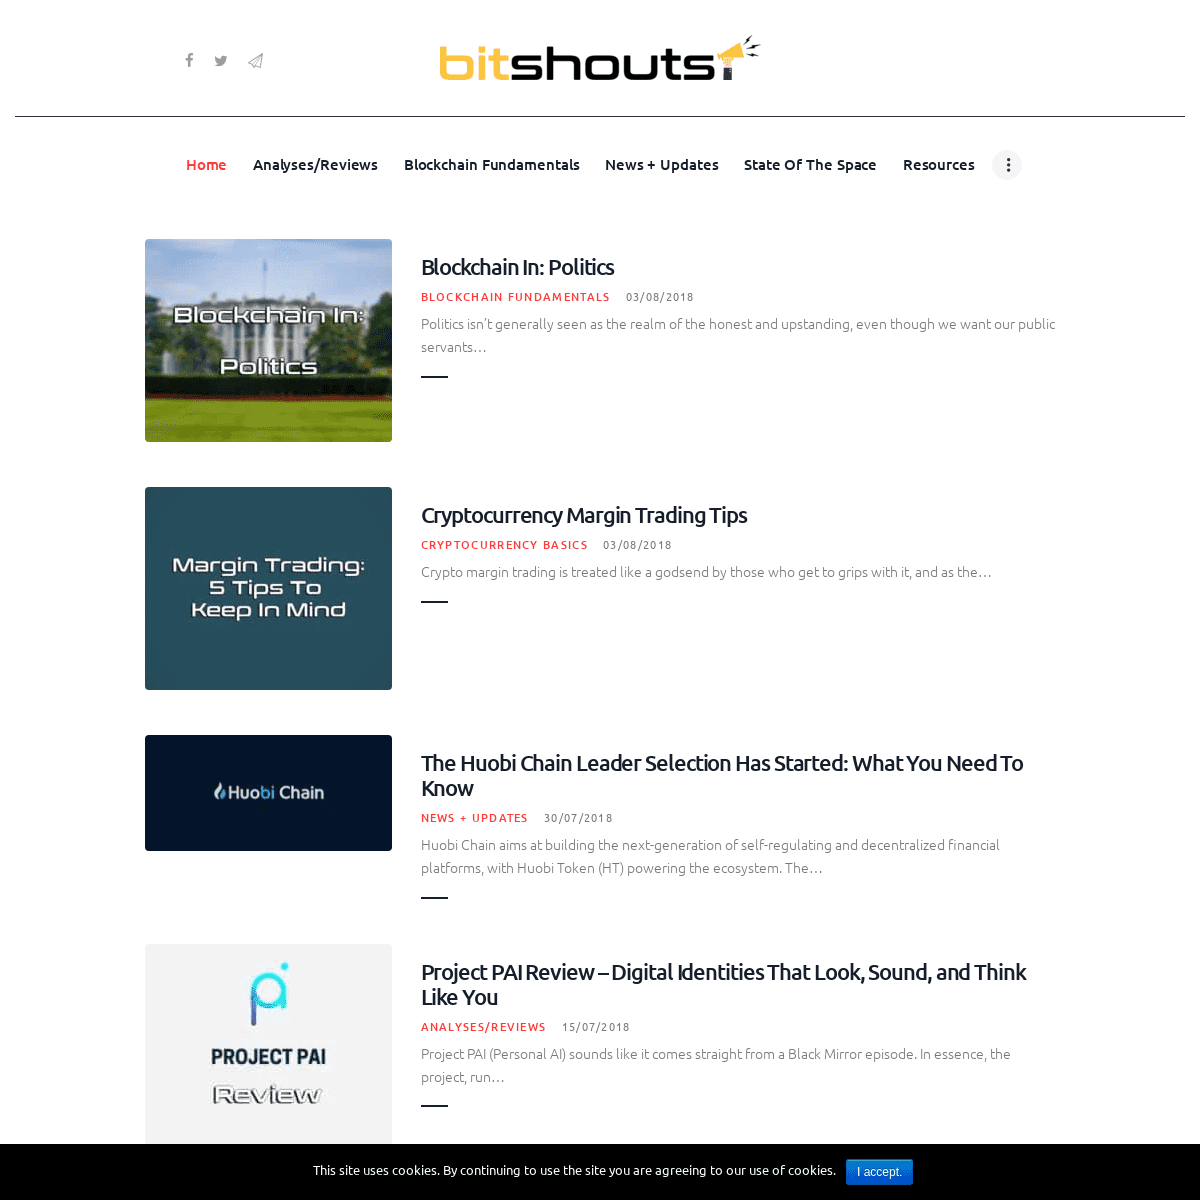 A complete backup of bitshouts.com